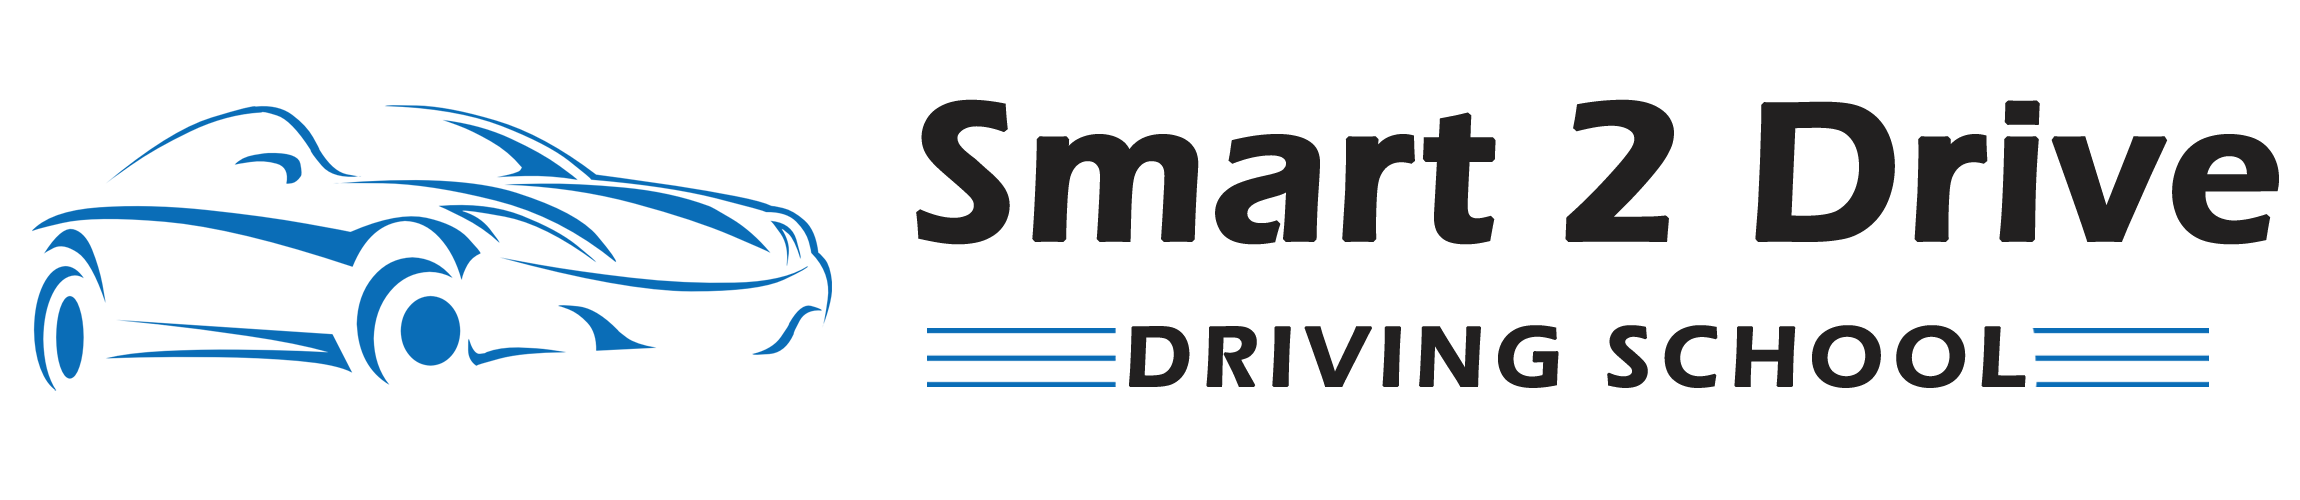 Smart 2 Drive